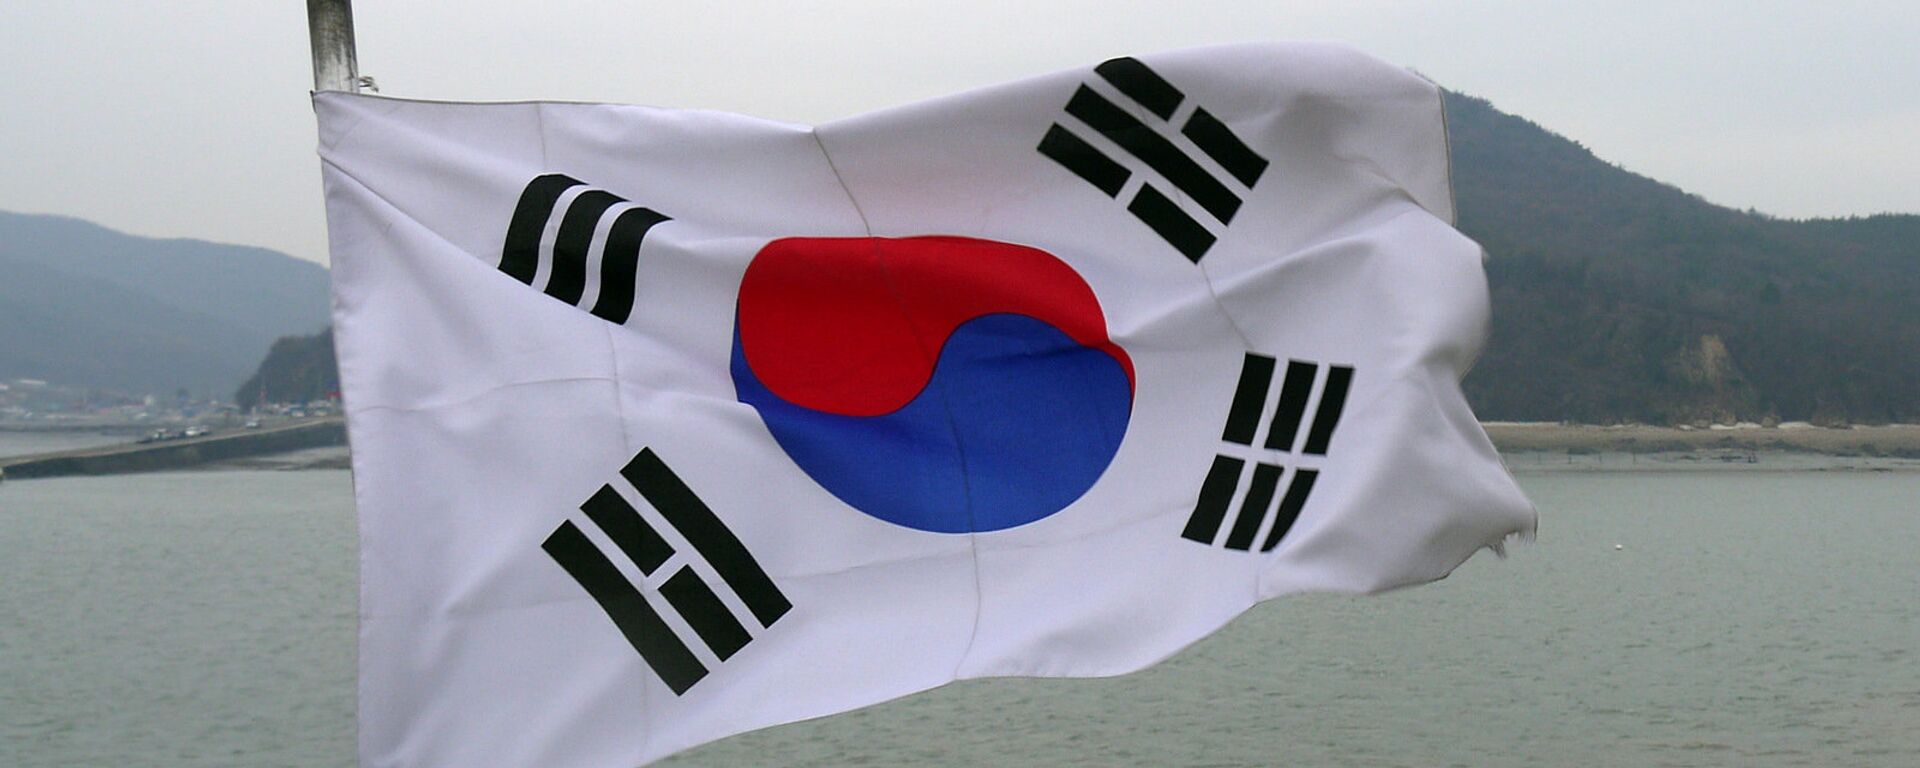 La bandera de Corea del Sur - Sputnik Mundo, 1920, 07.09.2021